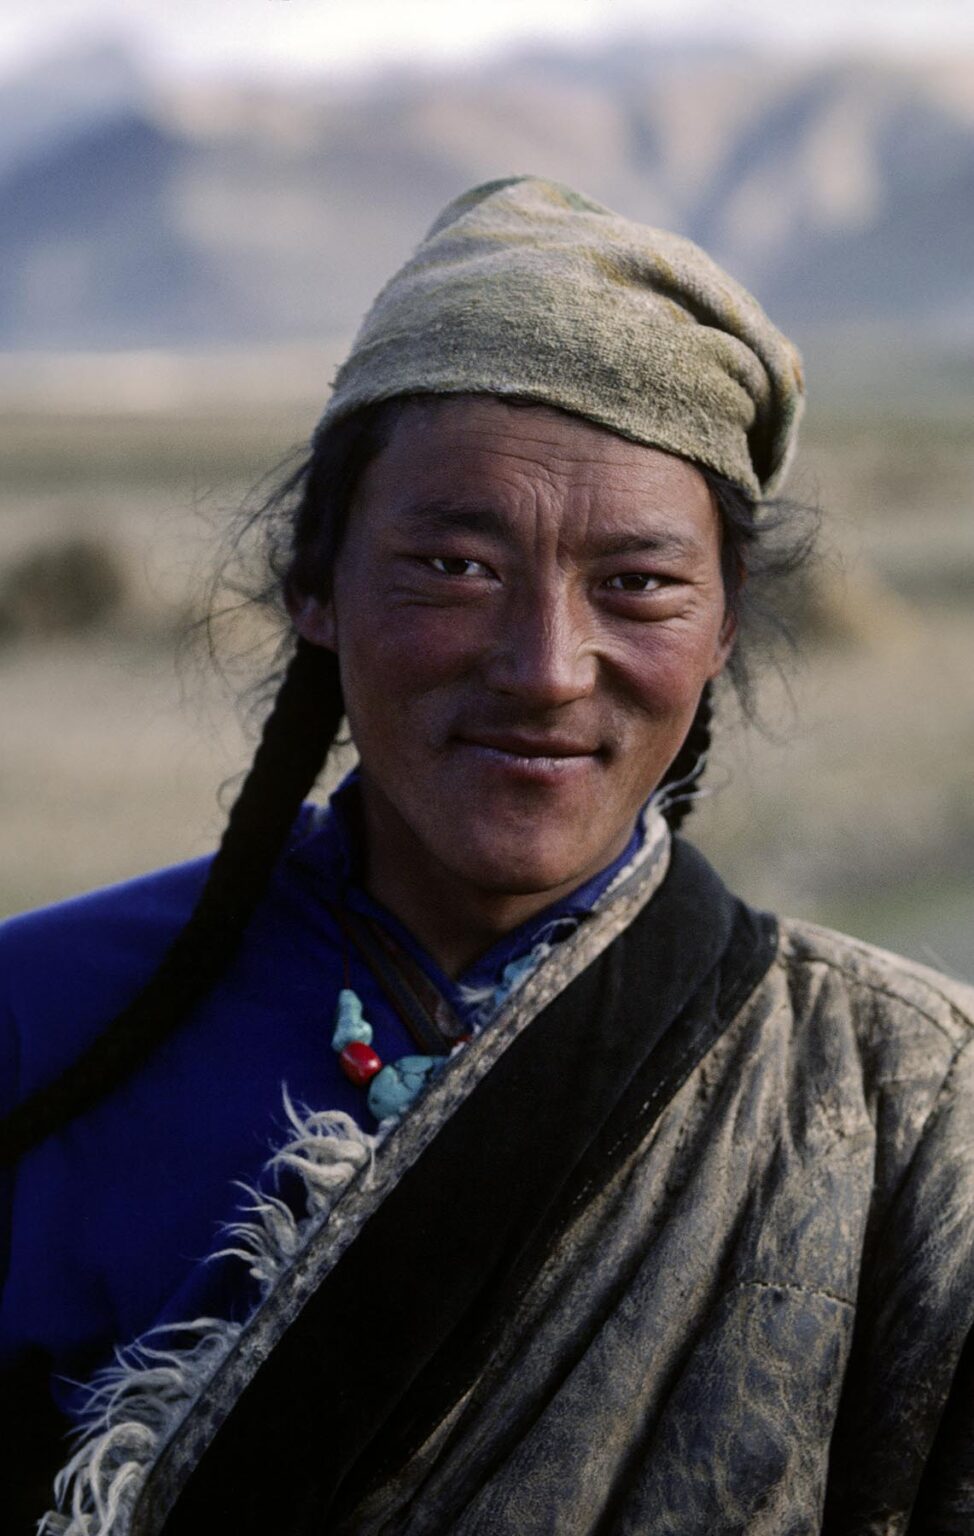 A Drokpa (Tibetan yak herder) on the Quinghai route near Lake Nam Tso - Tibet.